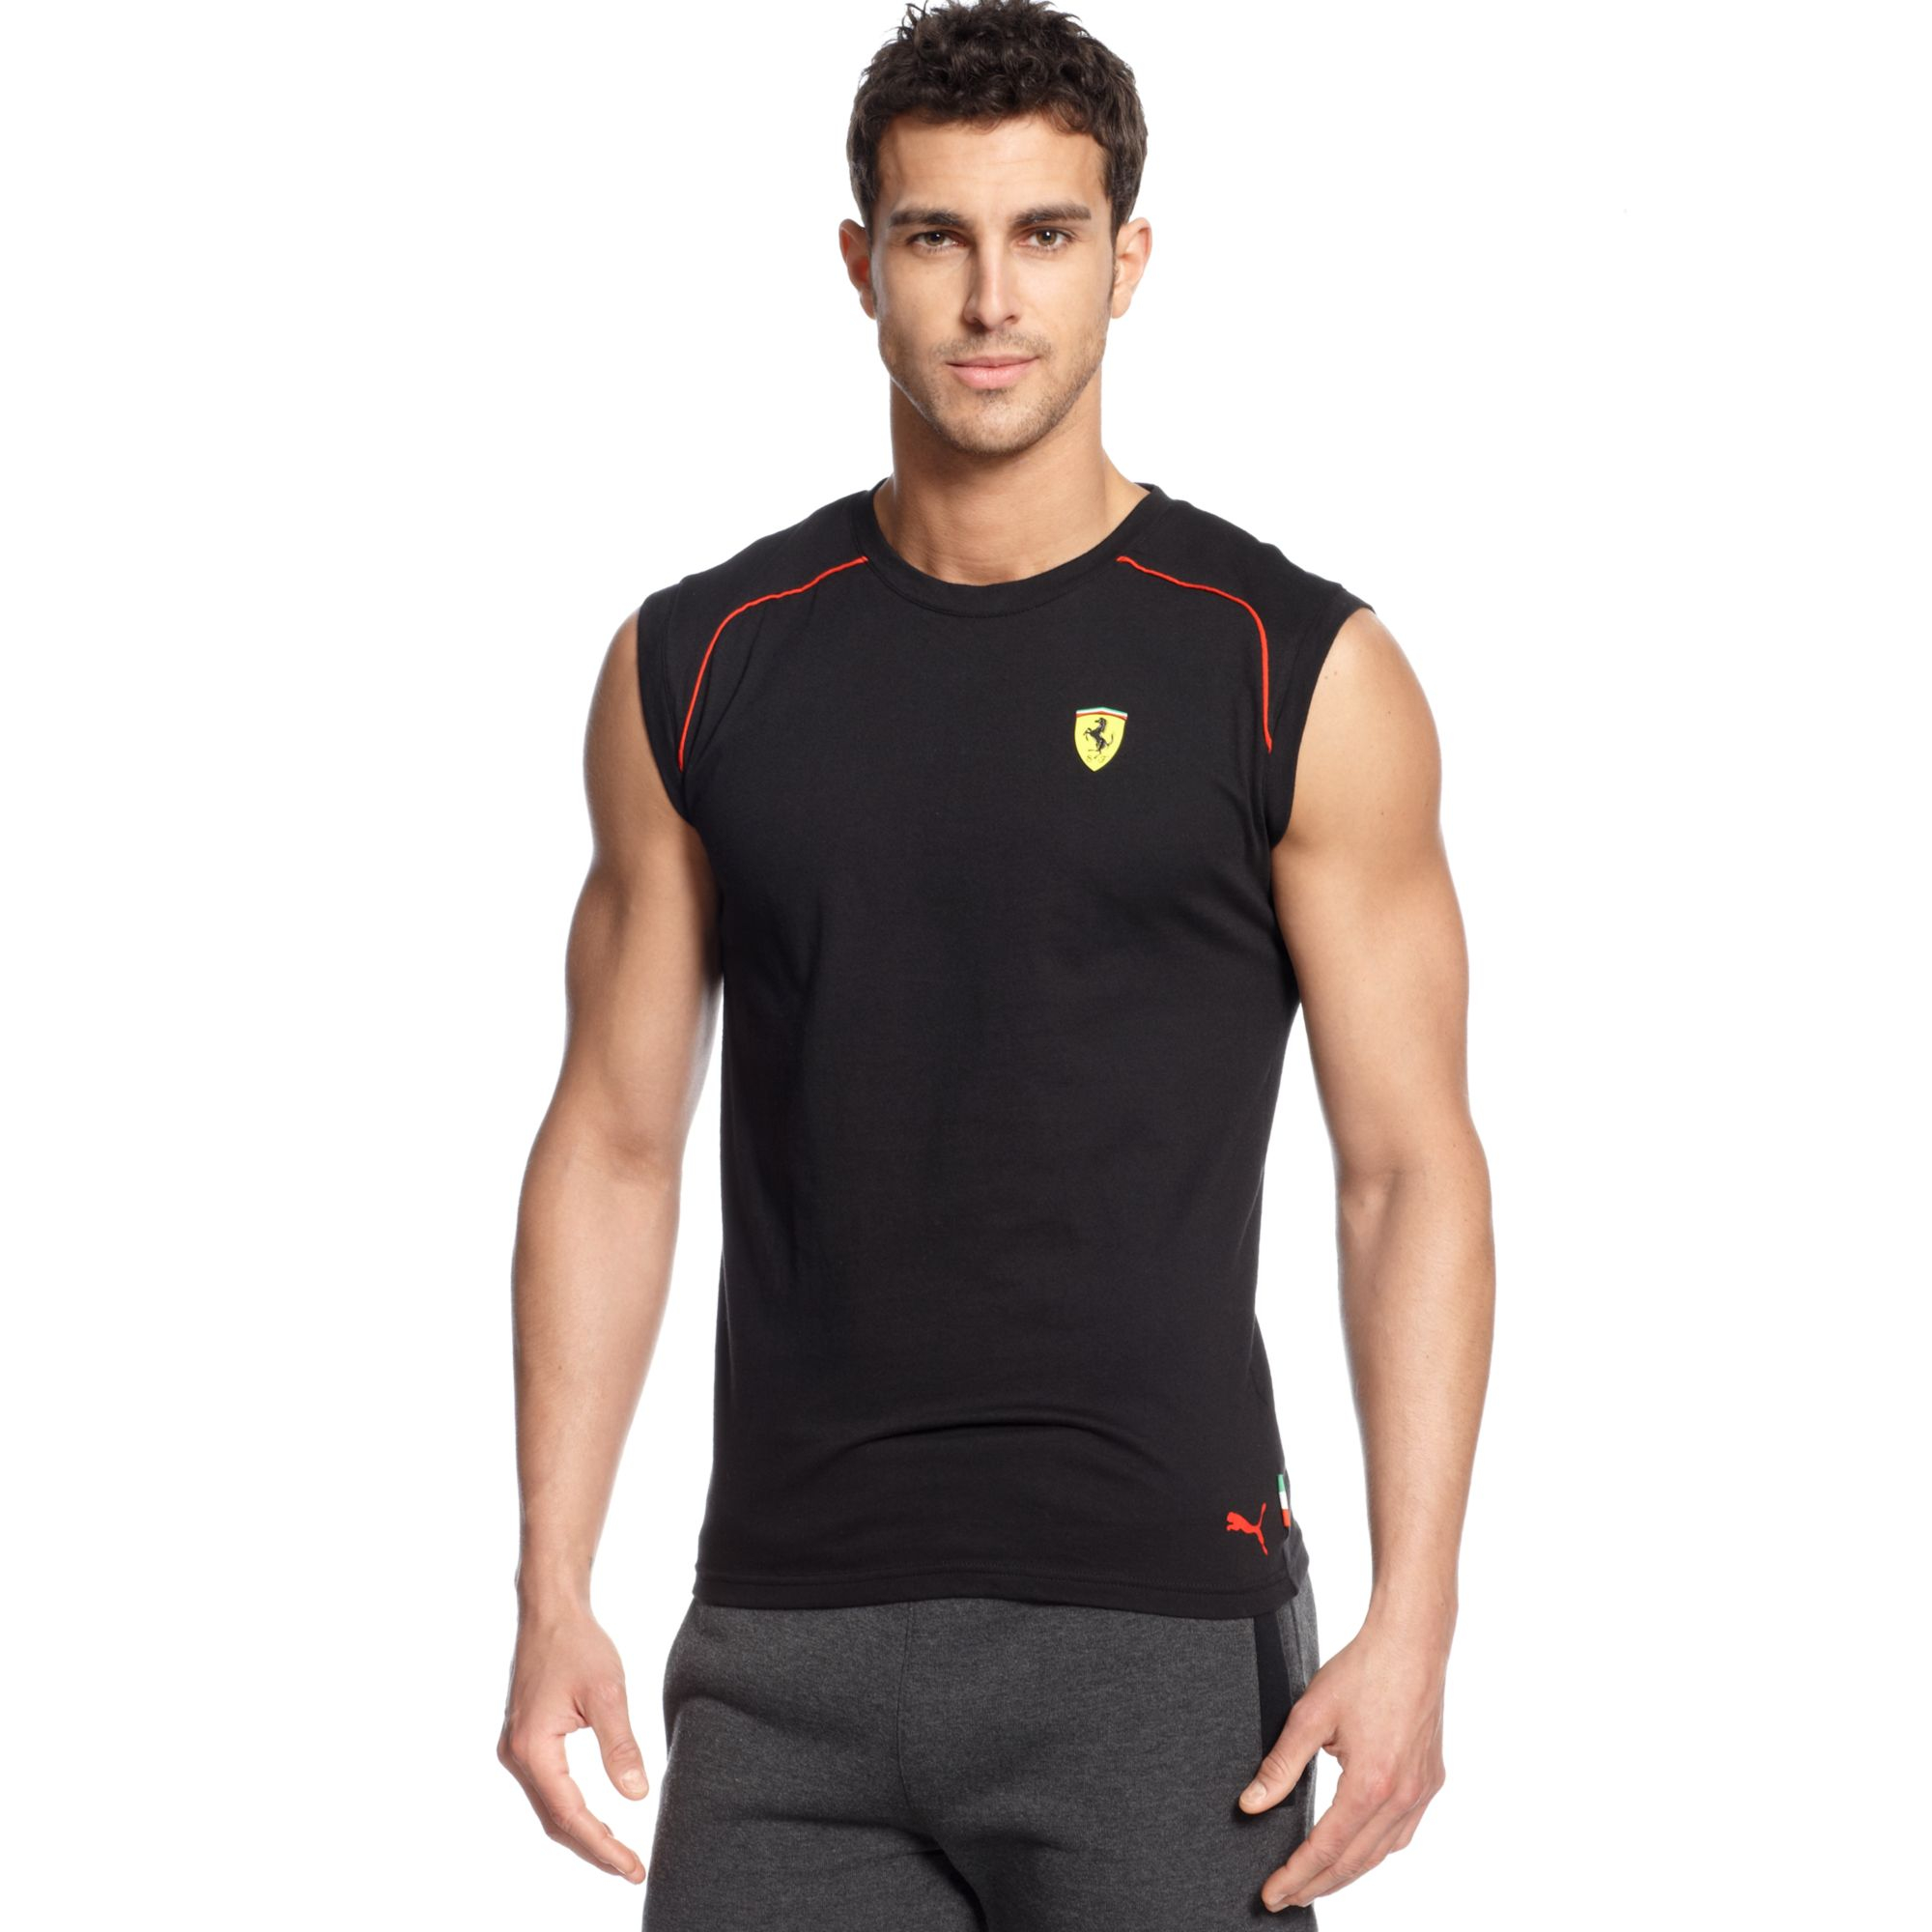 PUMA Scuderia Ferrari Sleeveless Tshirt in Black for Men - Lyst